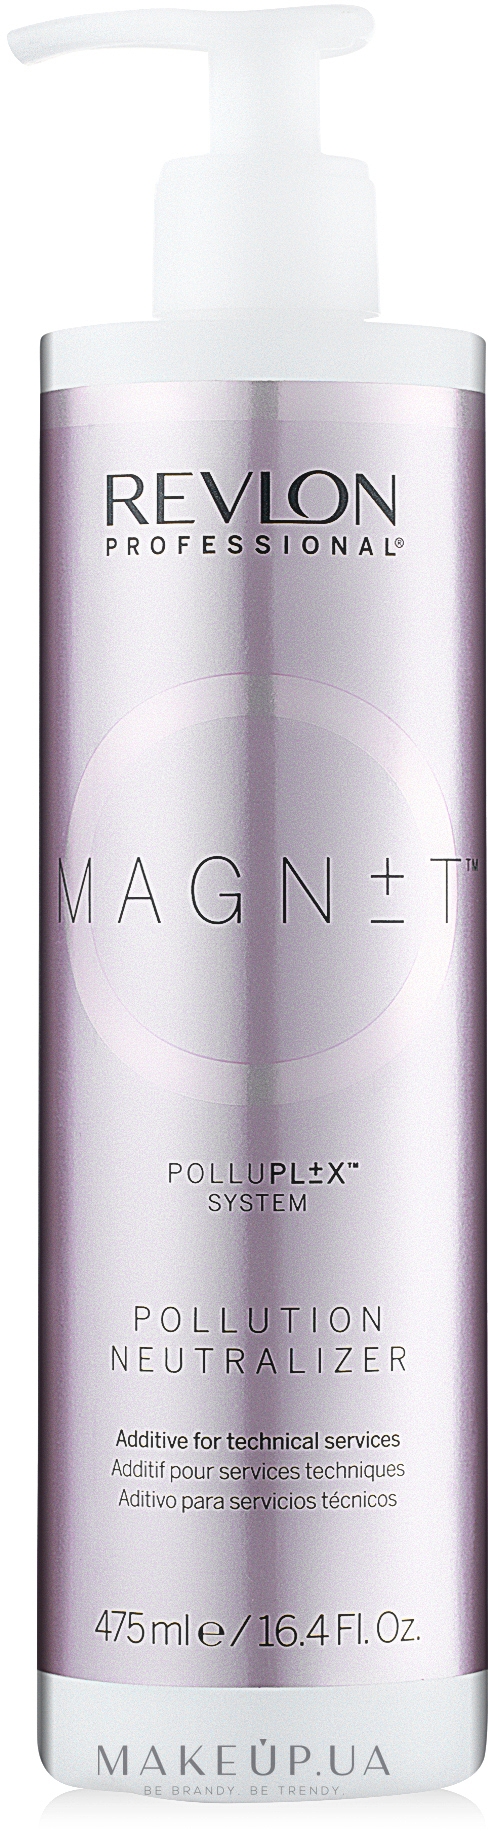 Нейтрализатор загрязнения волос - Revlon Professional Magnet Pollution Neutralizer — фото 475ml